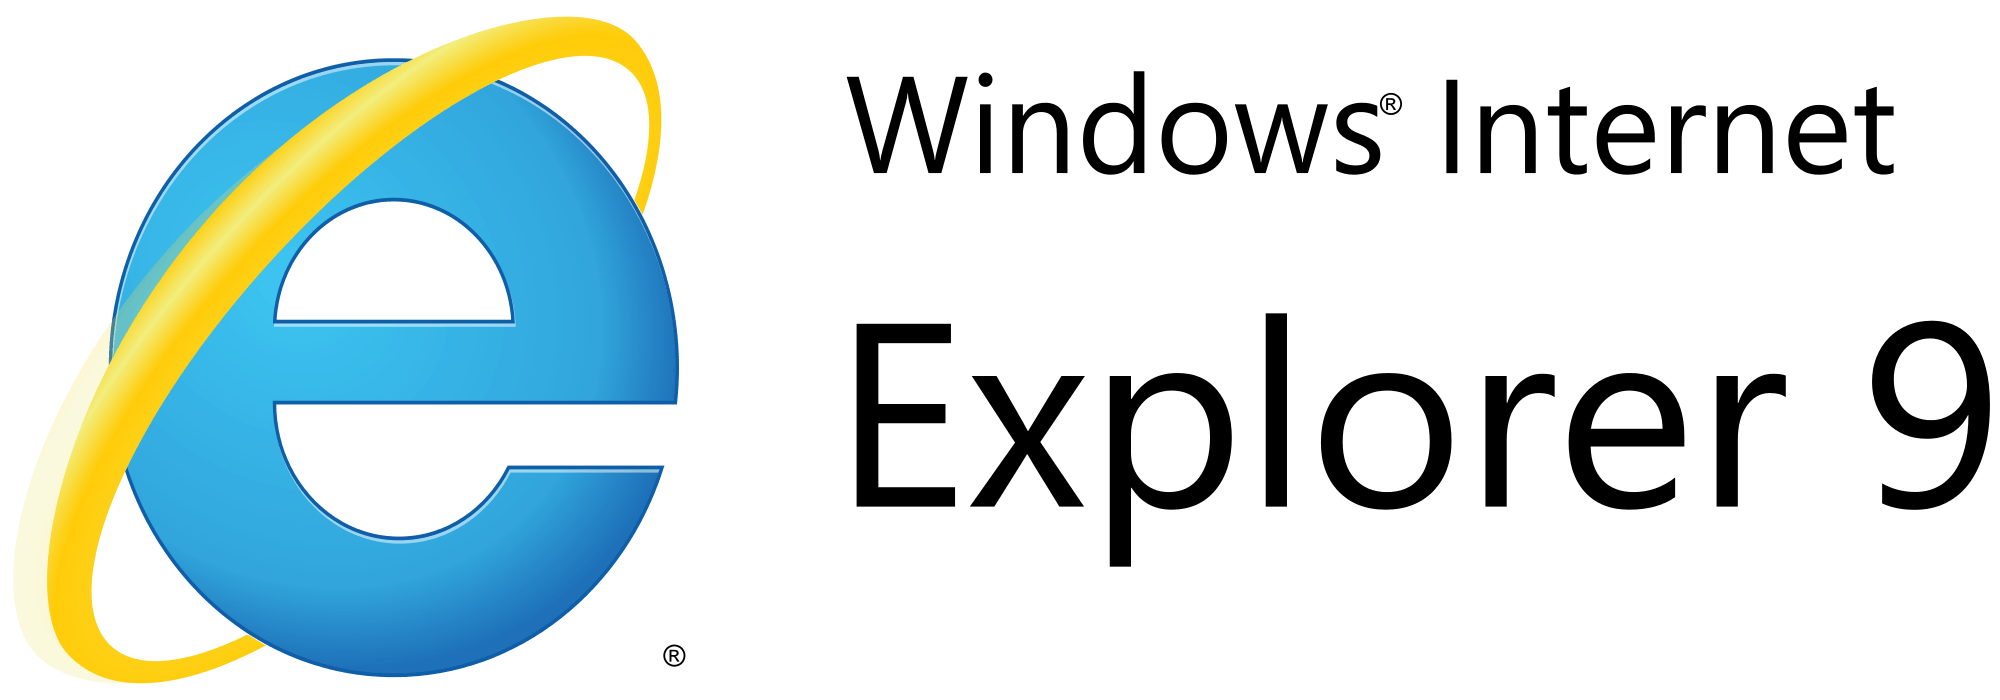 Internet Explorer 9 Logo - Windows Internet Explorer 9 Logo.svg